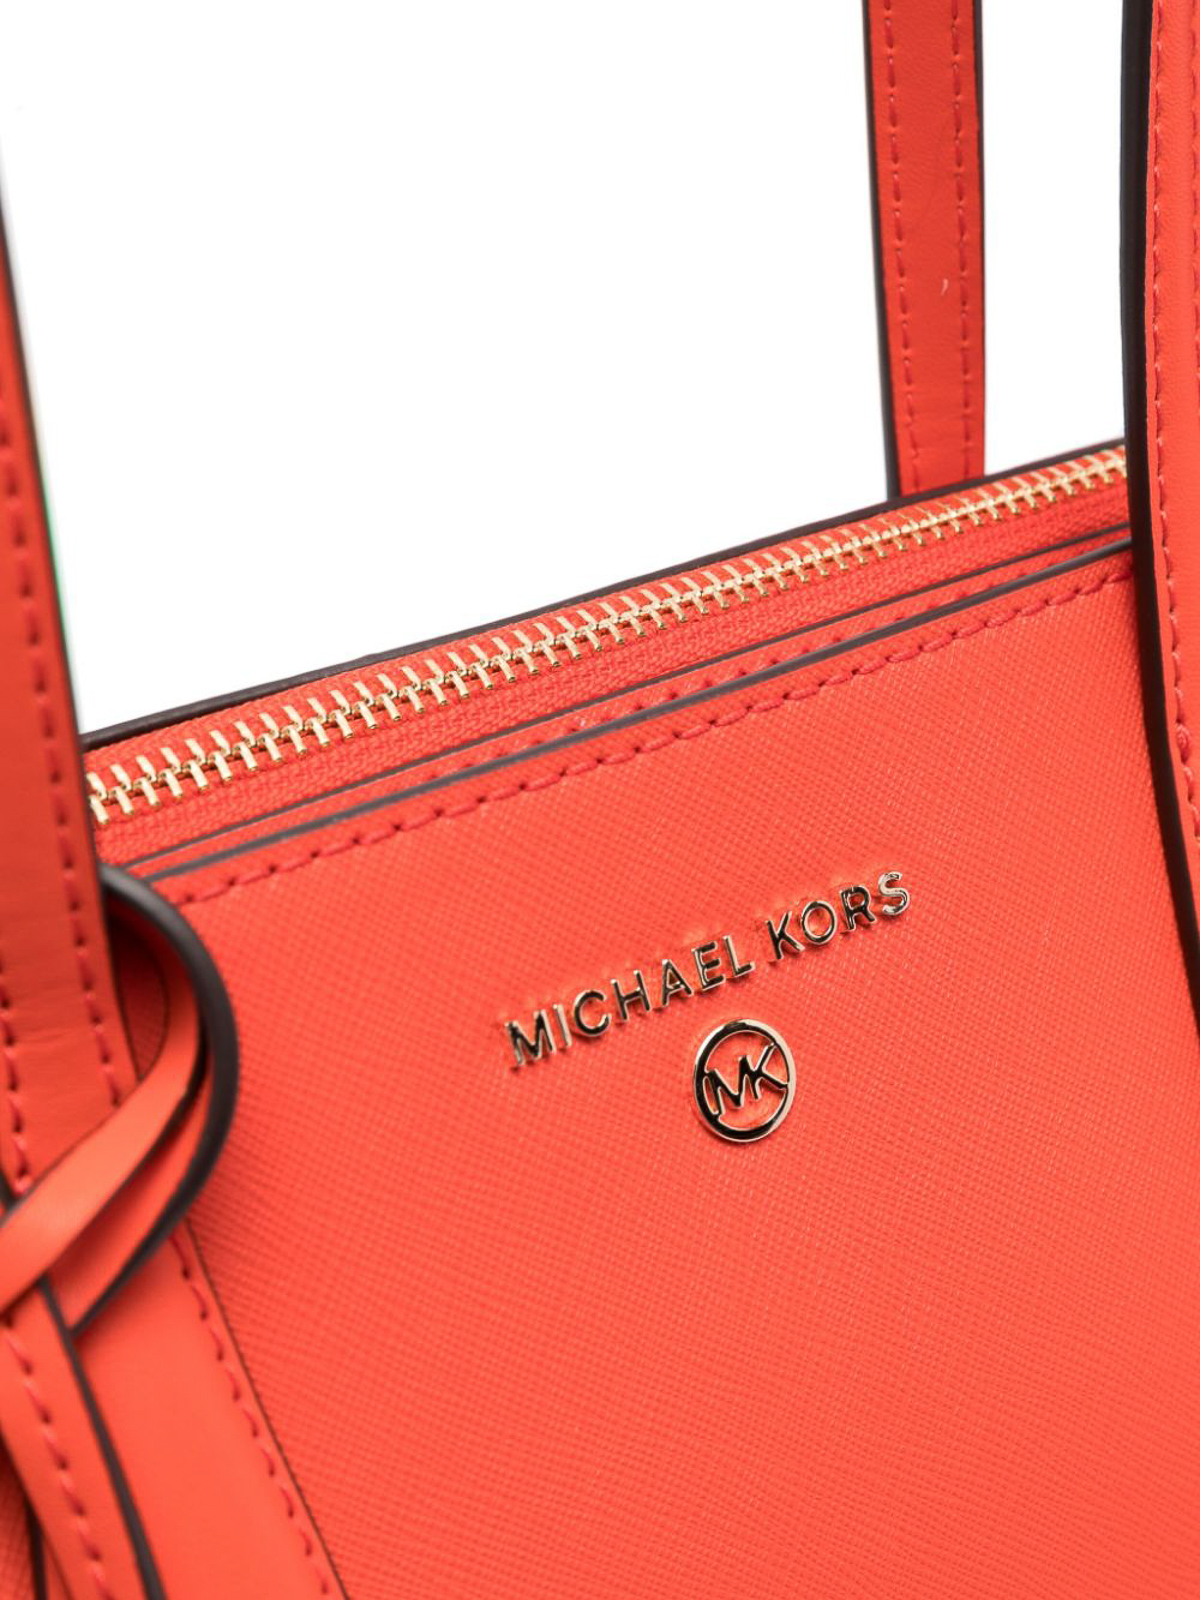 Shop Michael Kors Tote Bag Original online